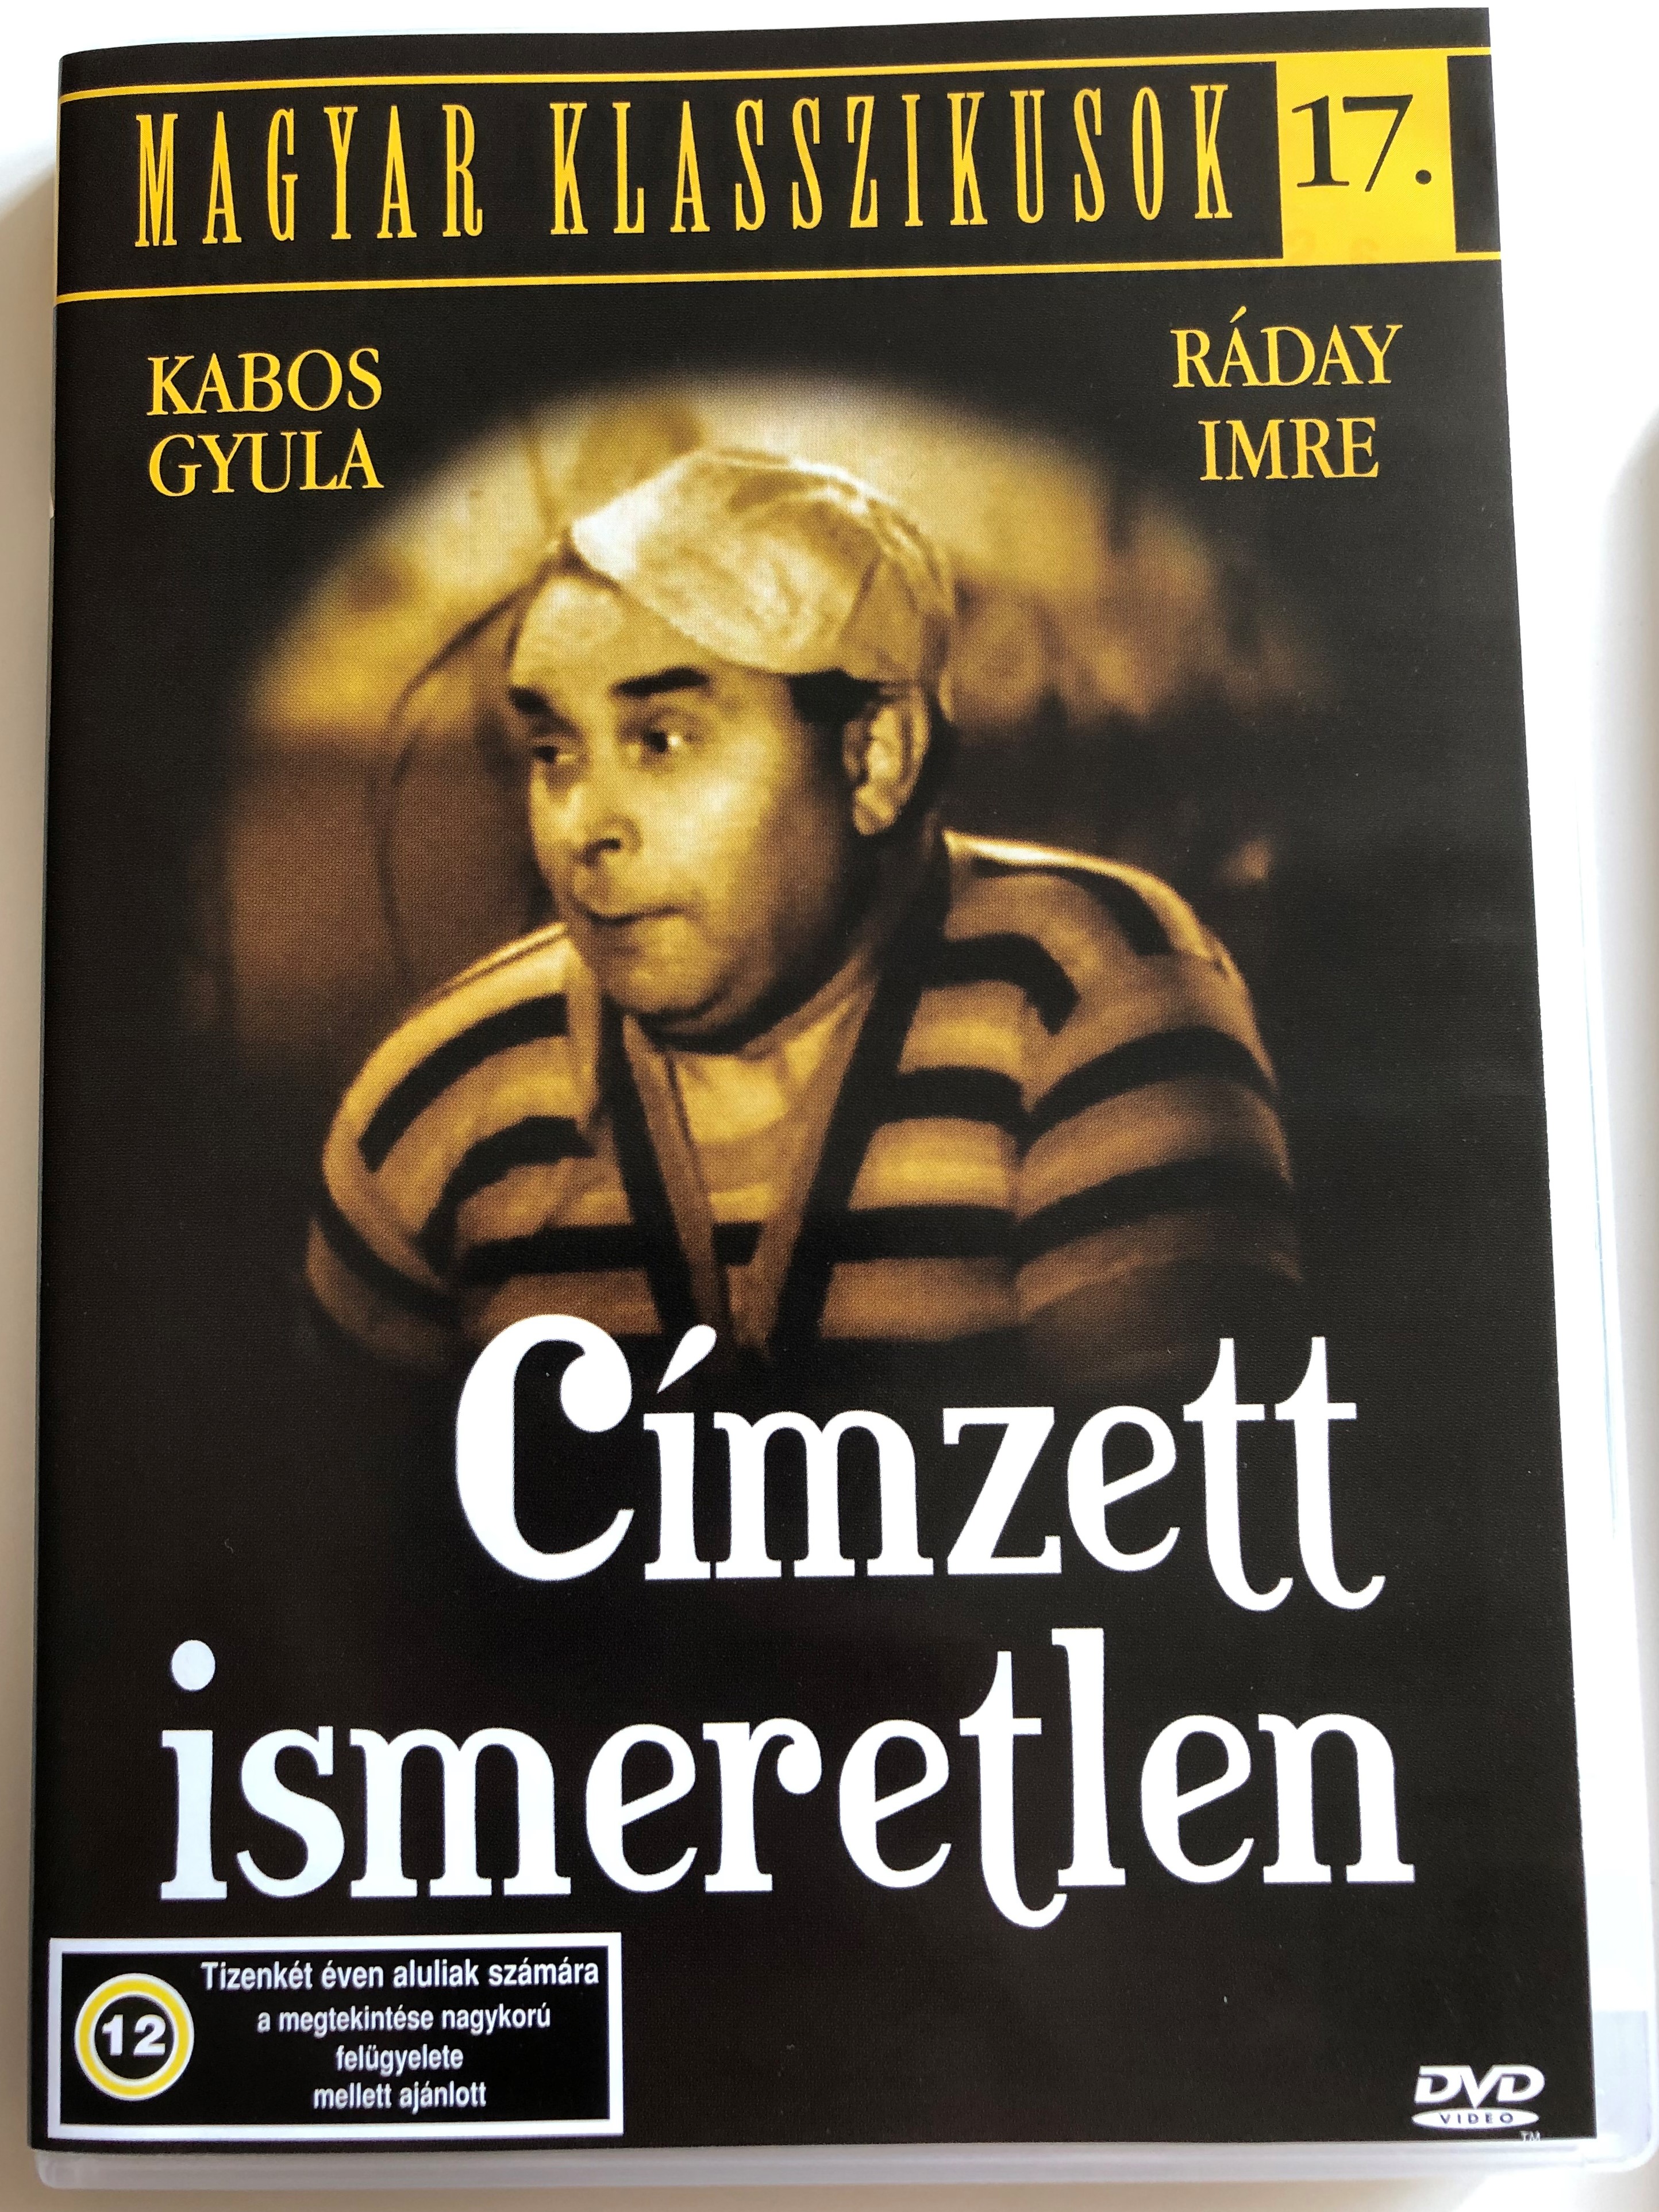 c-mzett-ismeretlen-dvd-1935-recipient-unknown-directed-by-ga-l-b-la-starring-kabos-gyula-r-day-imre-gay-ir-n-hungarian-b-w-classic-magyar-klasszikusok-17.-1-.jpg